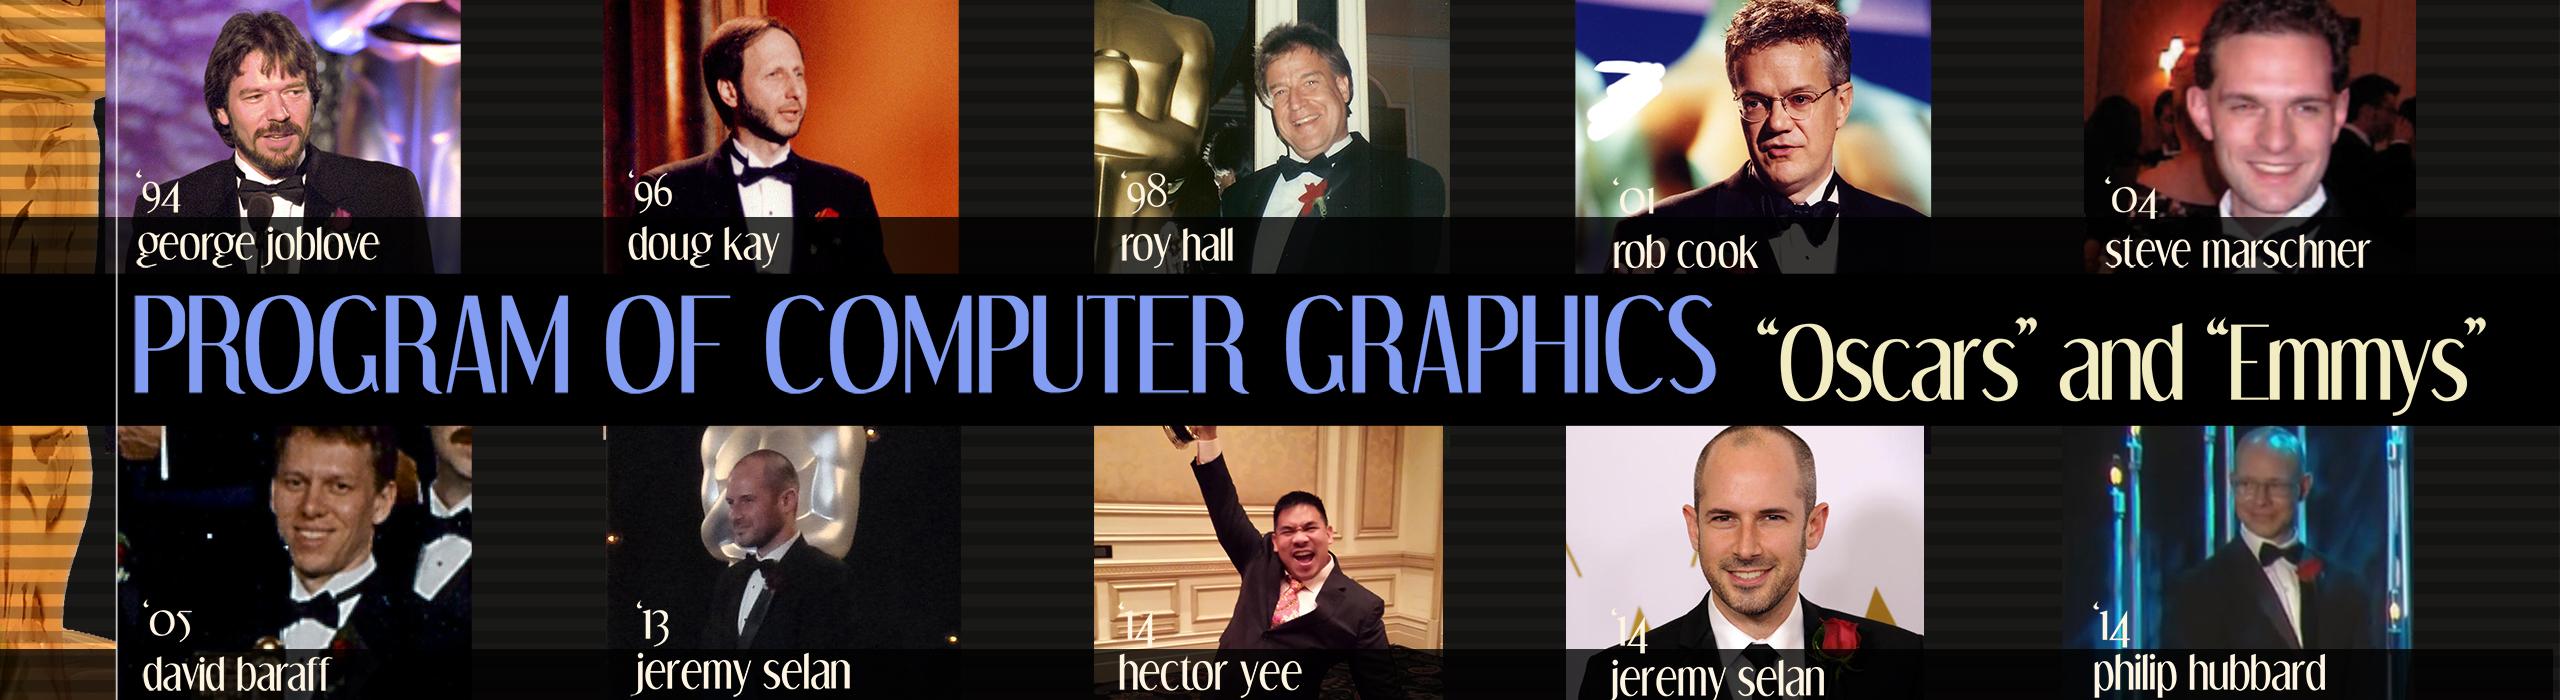 Program of Computer Graphics Technical Oscar Winners